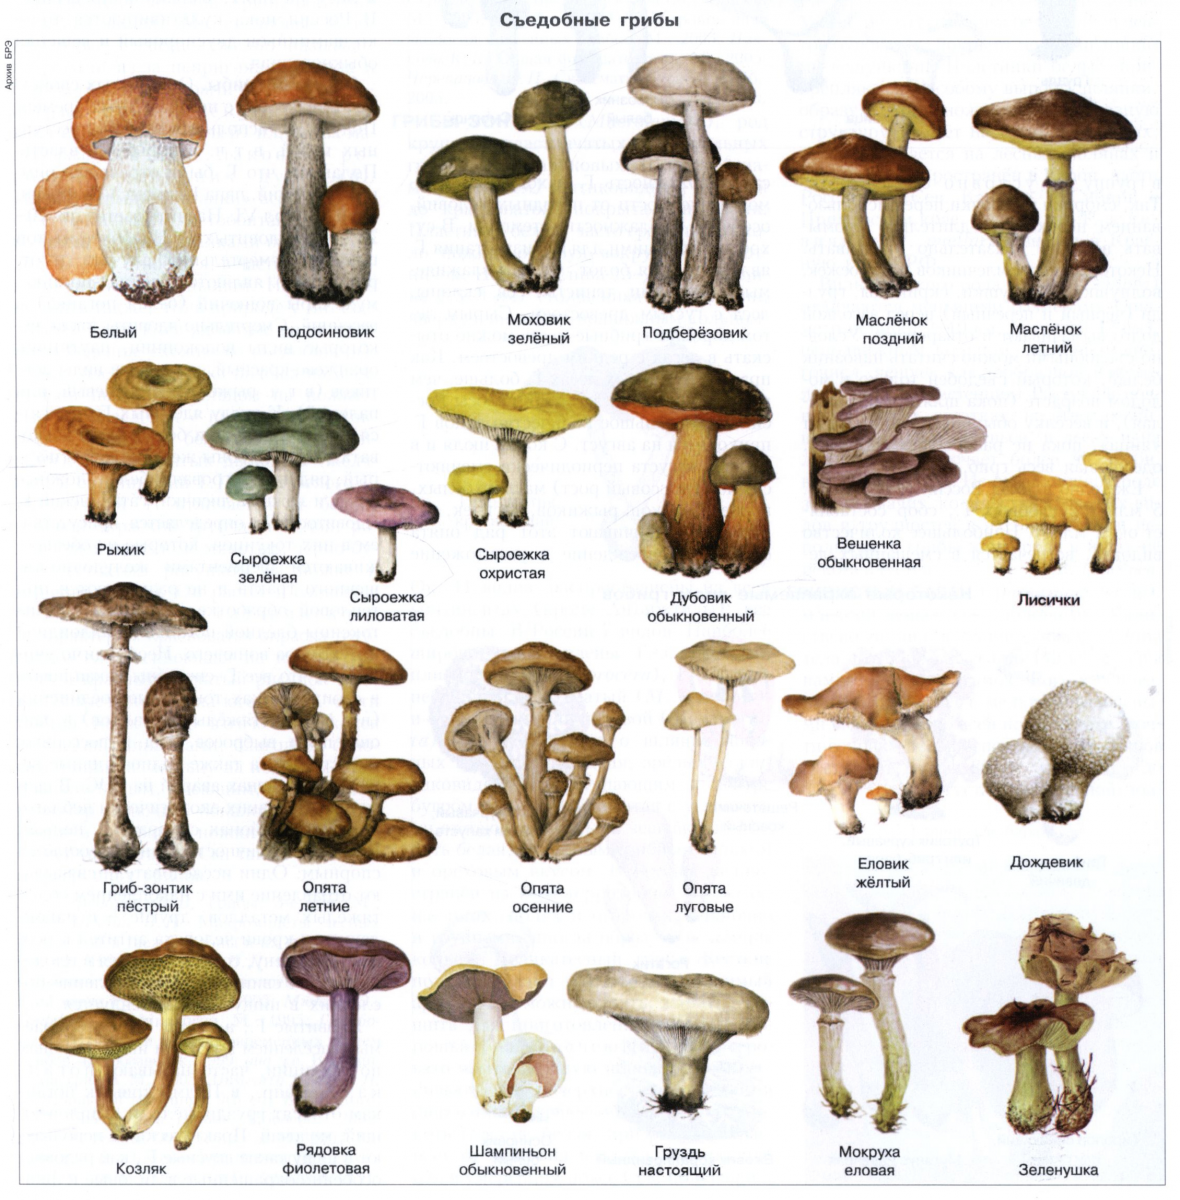 What kingdom do mushrooms belong to?